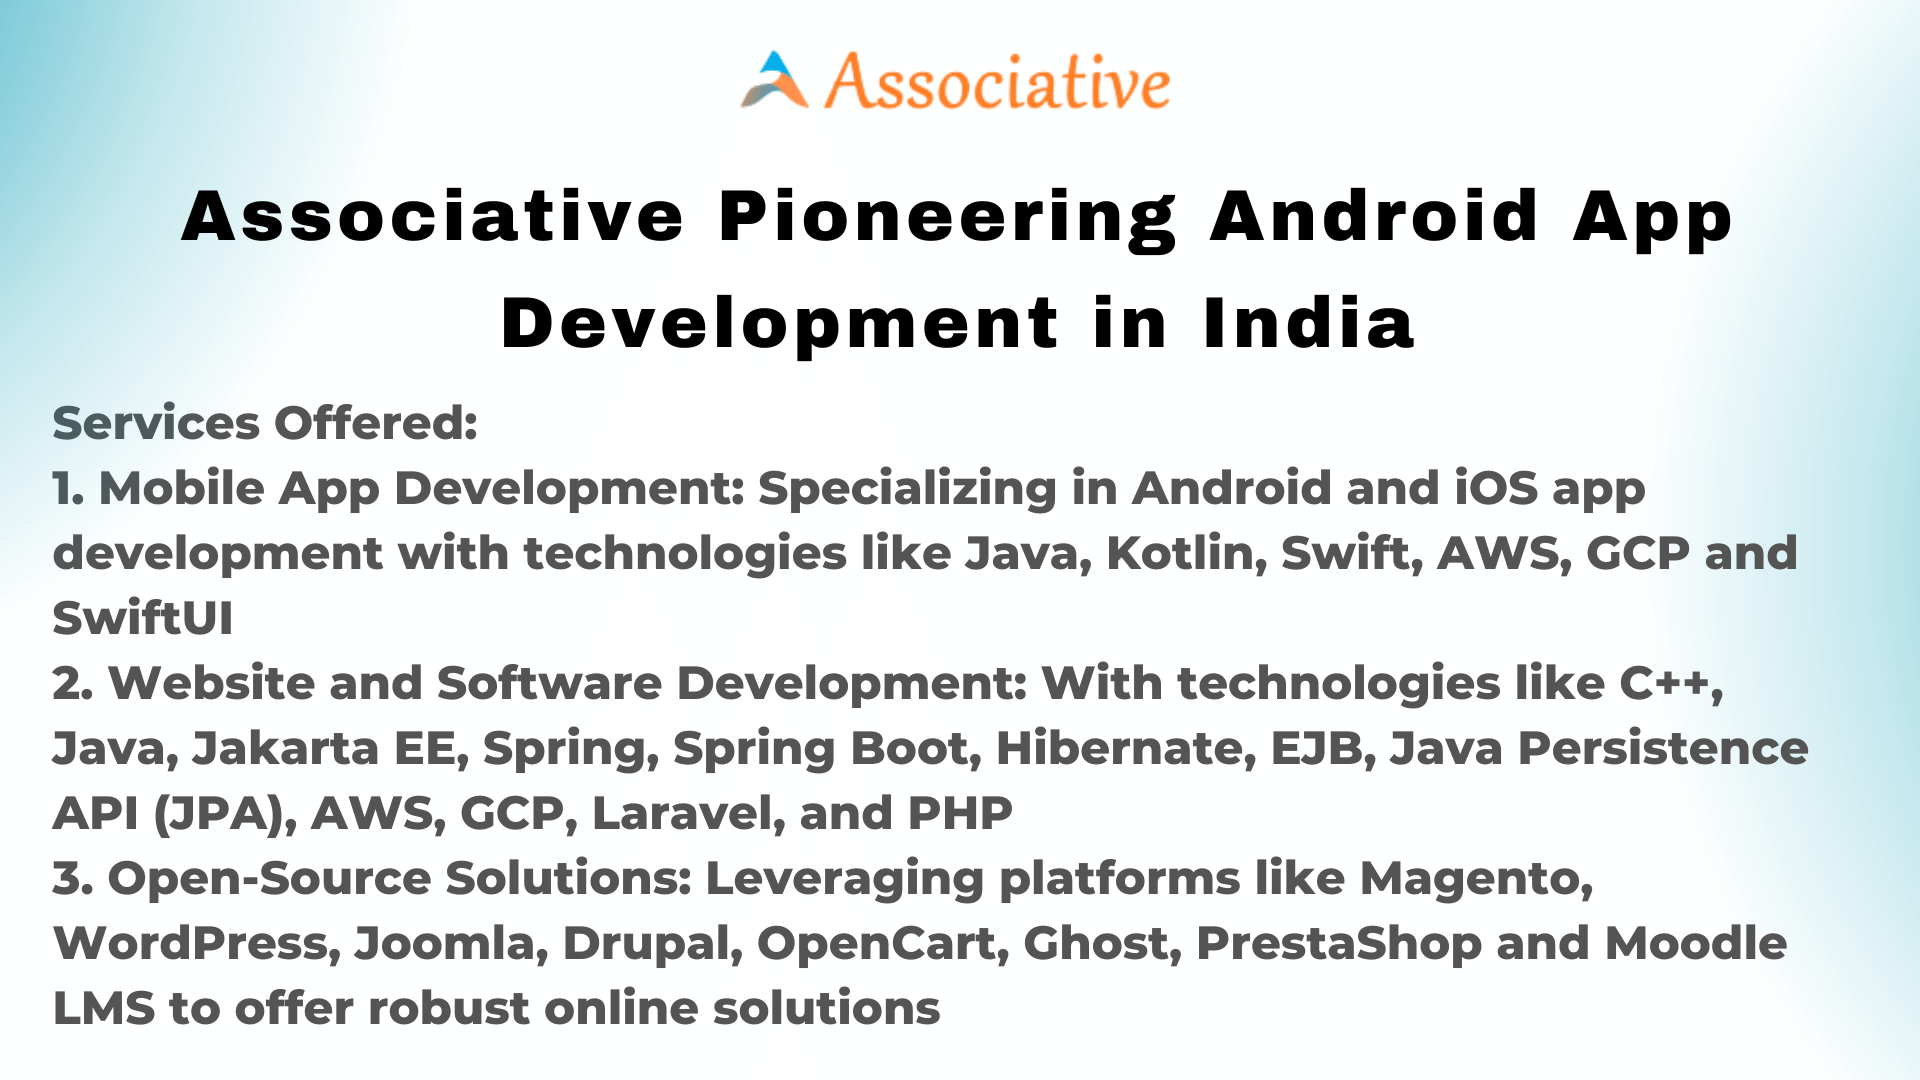 Associative Pioneering Android App Development in India